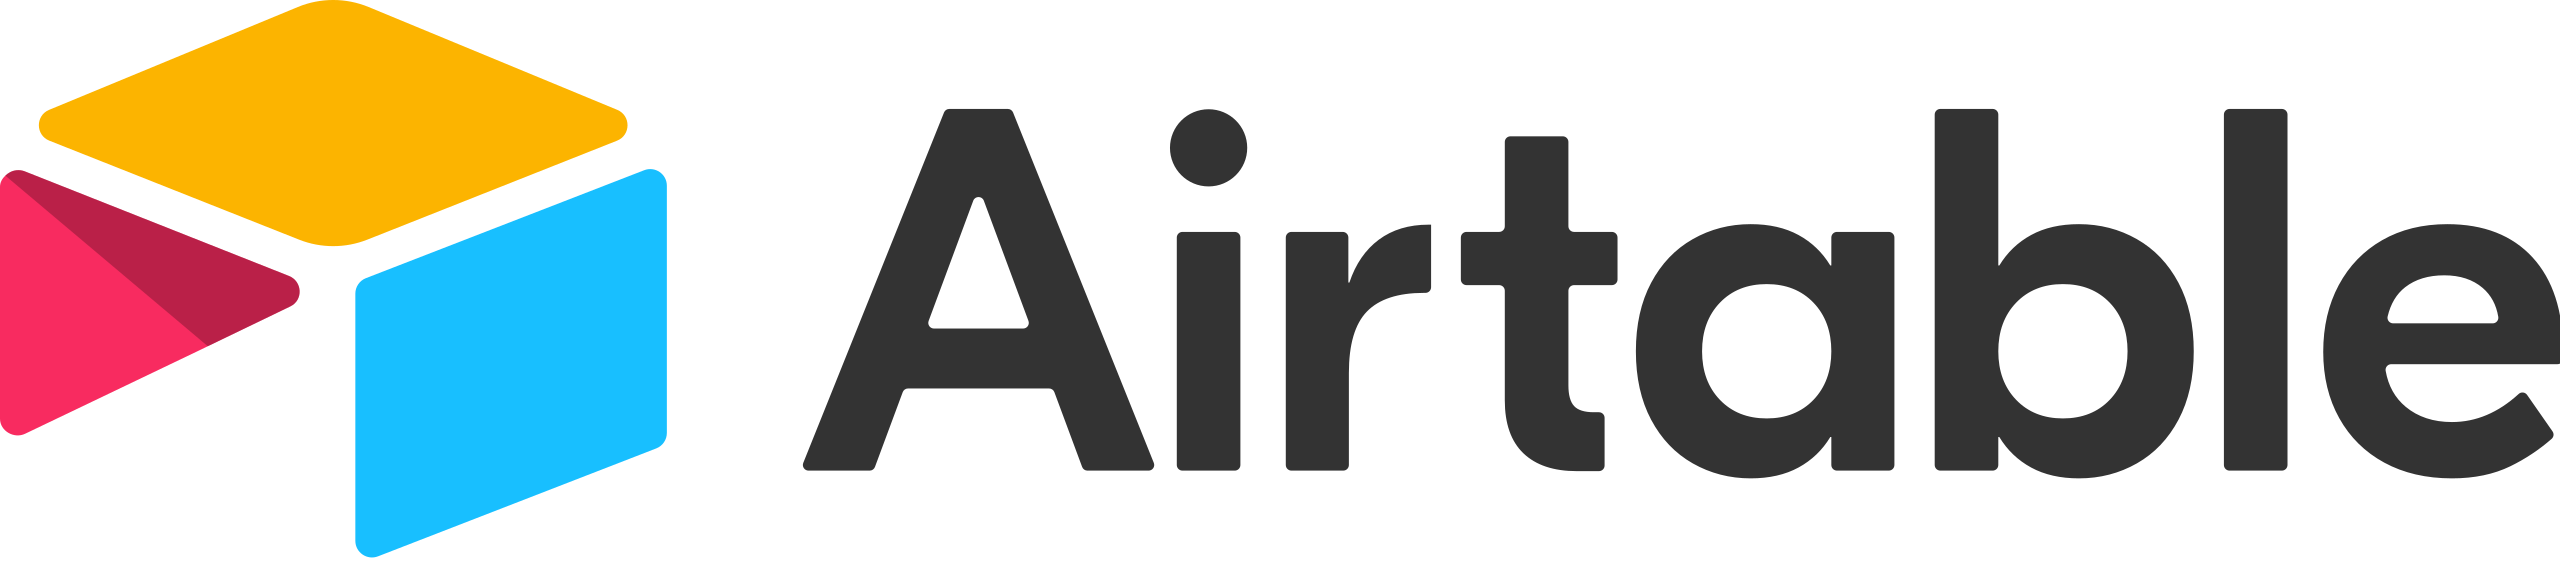 Airtable_Logo.svg.png